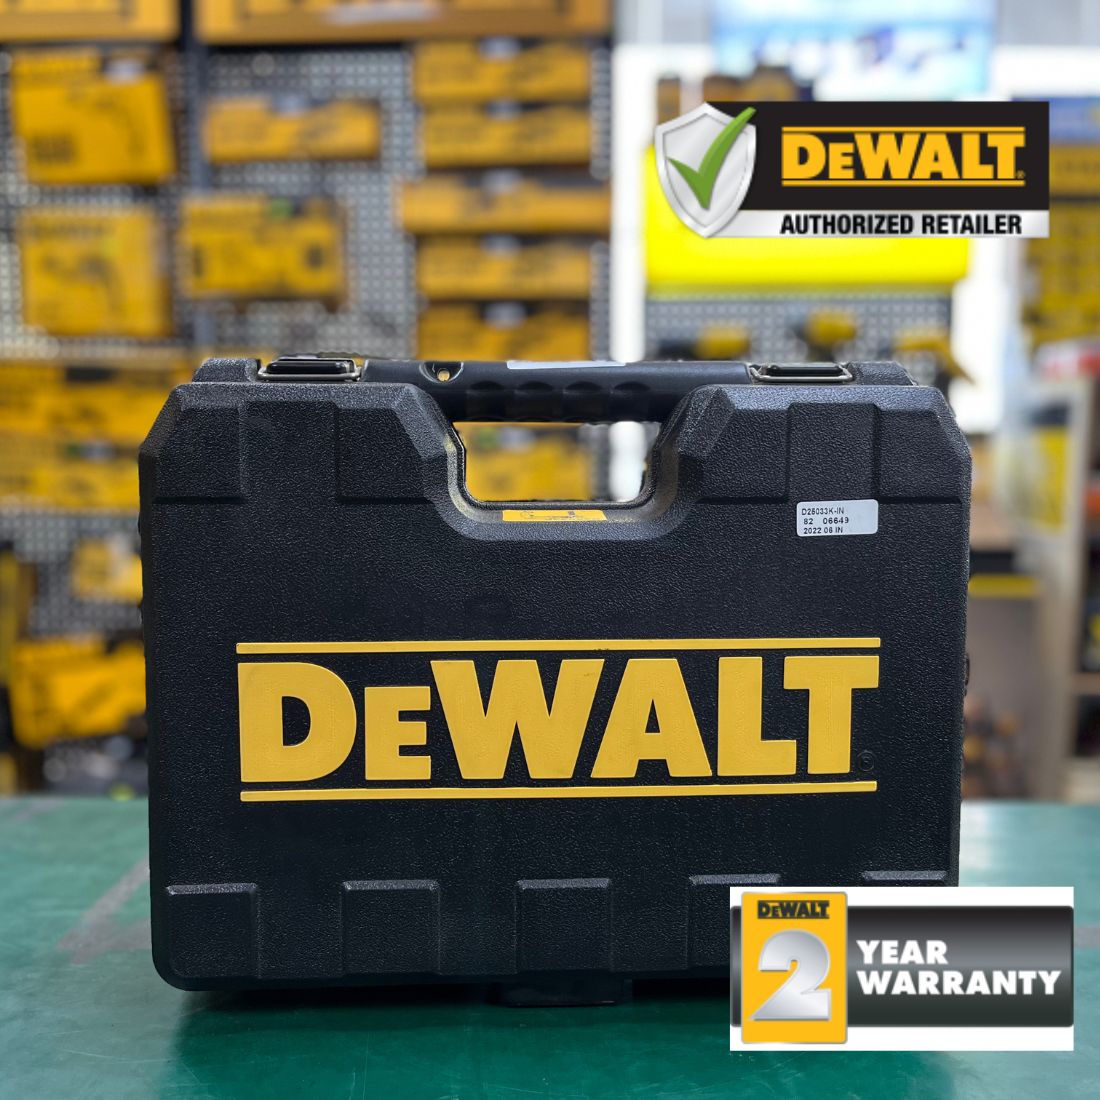 Tool Depot is an dewalt authorized dealer in porur chennai.